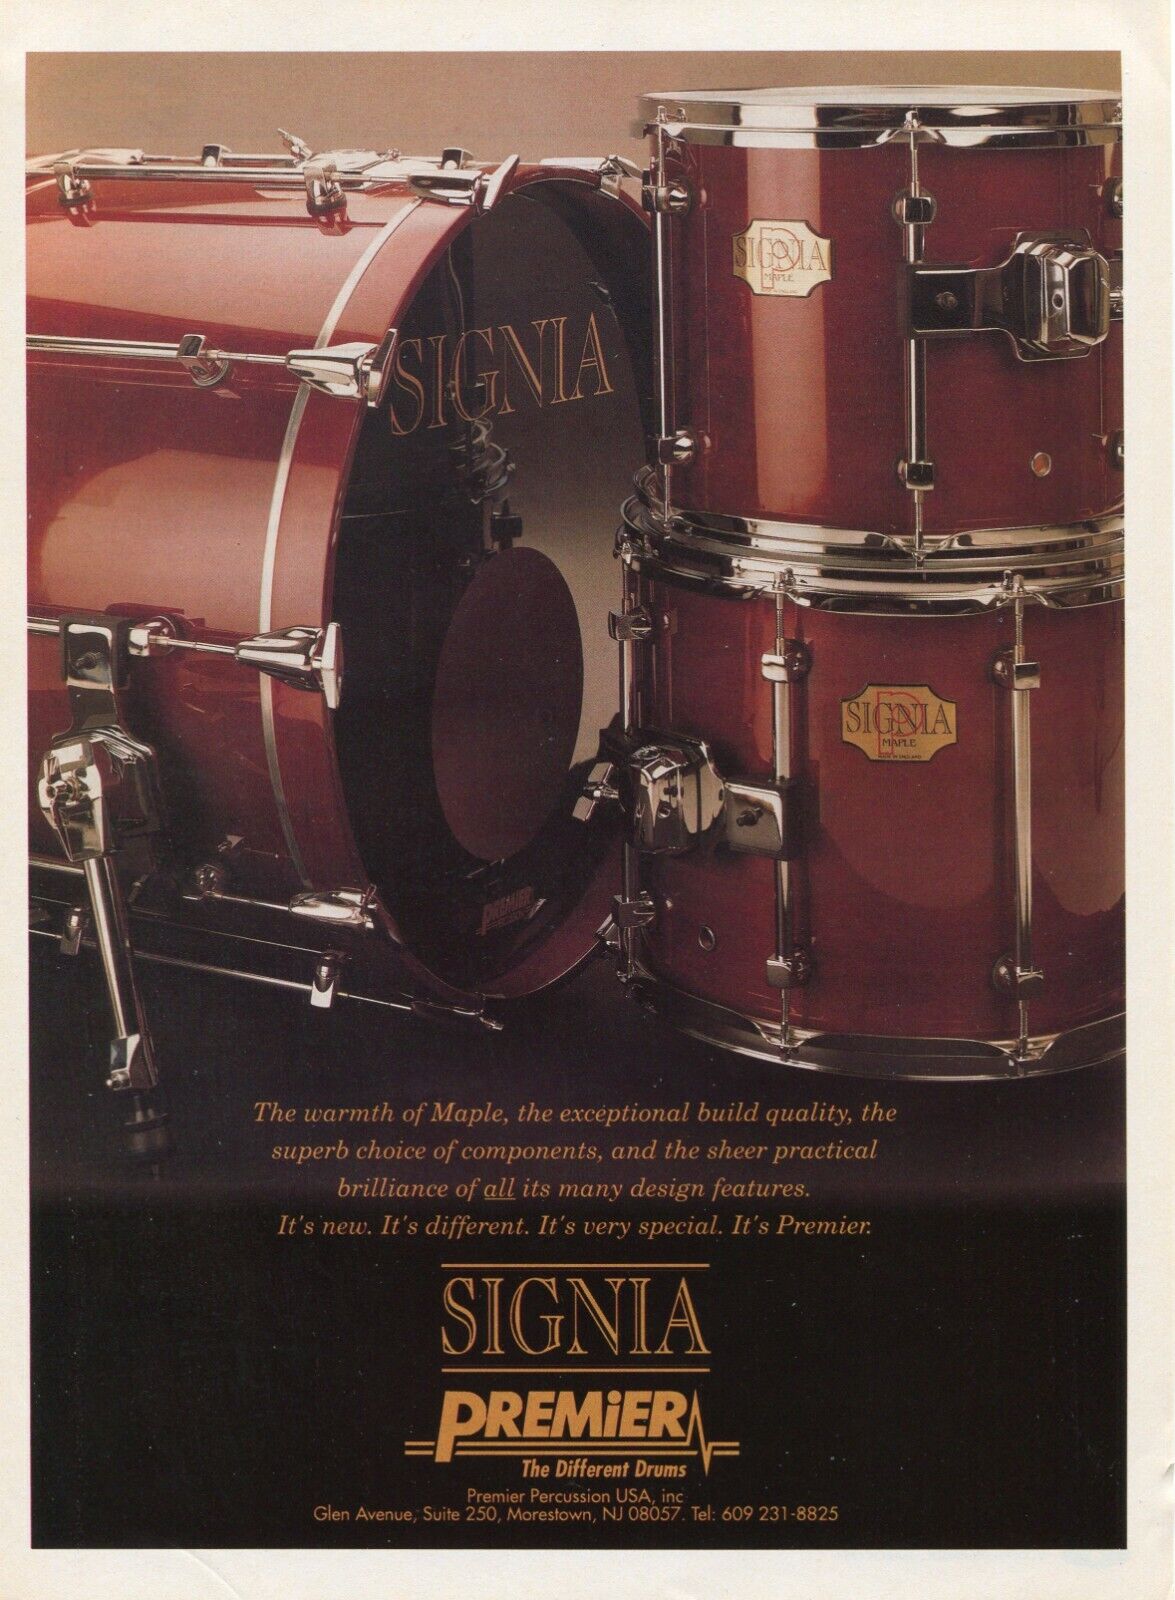 1993 Print Ad of Premier Signia Maple Drum Kit